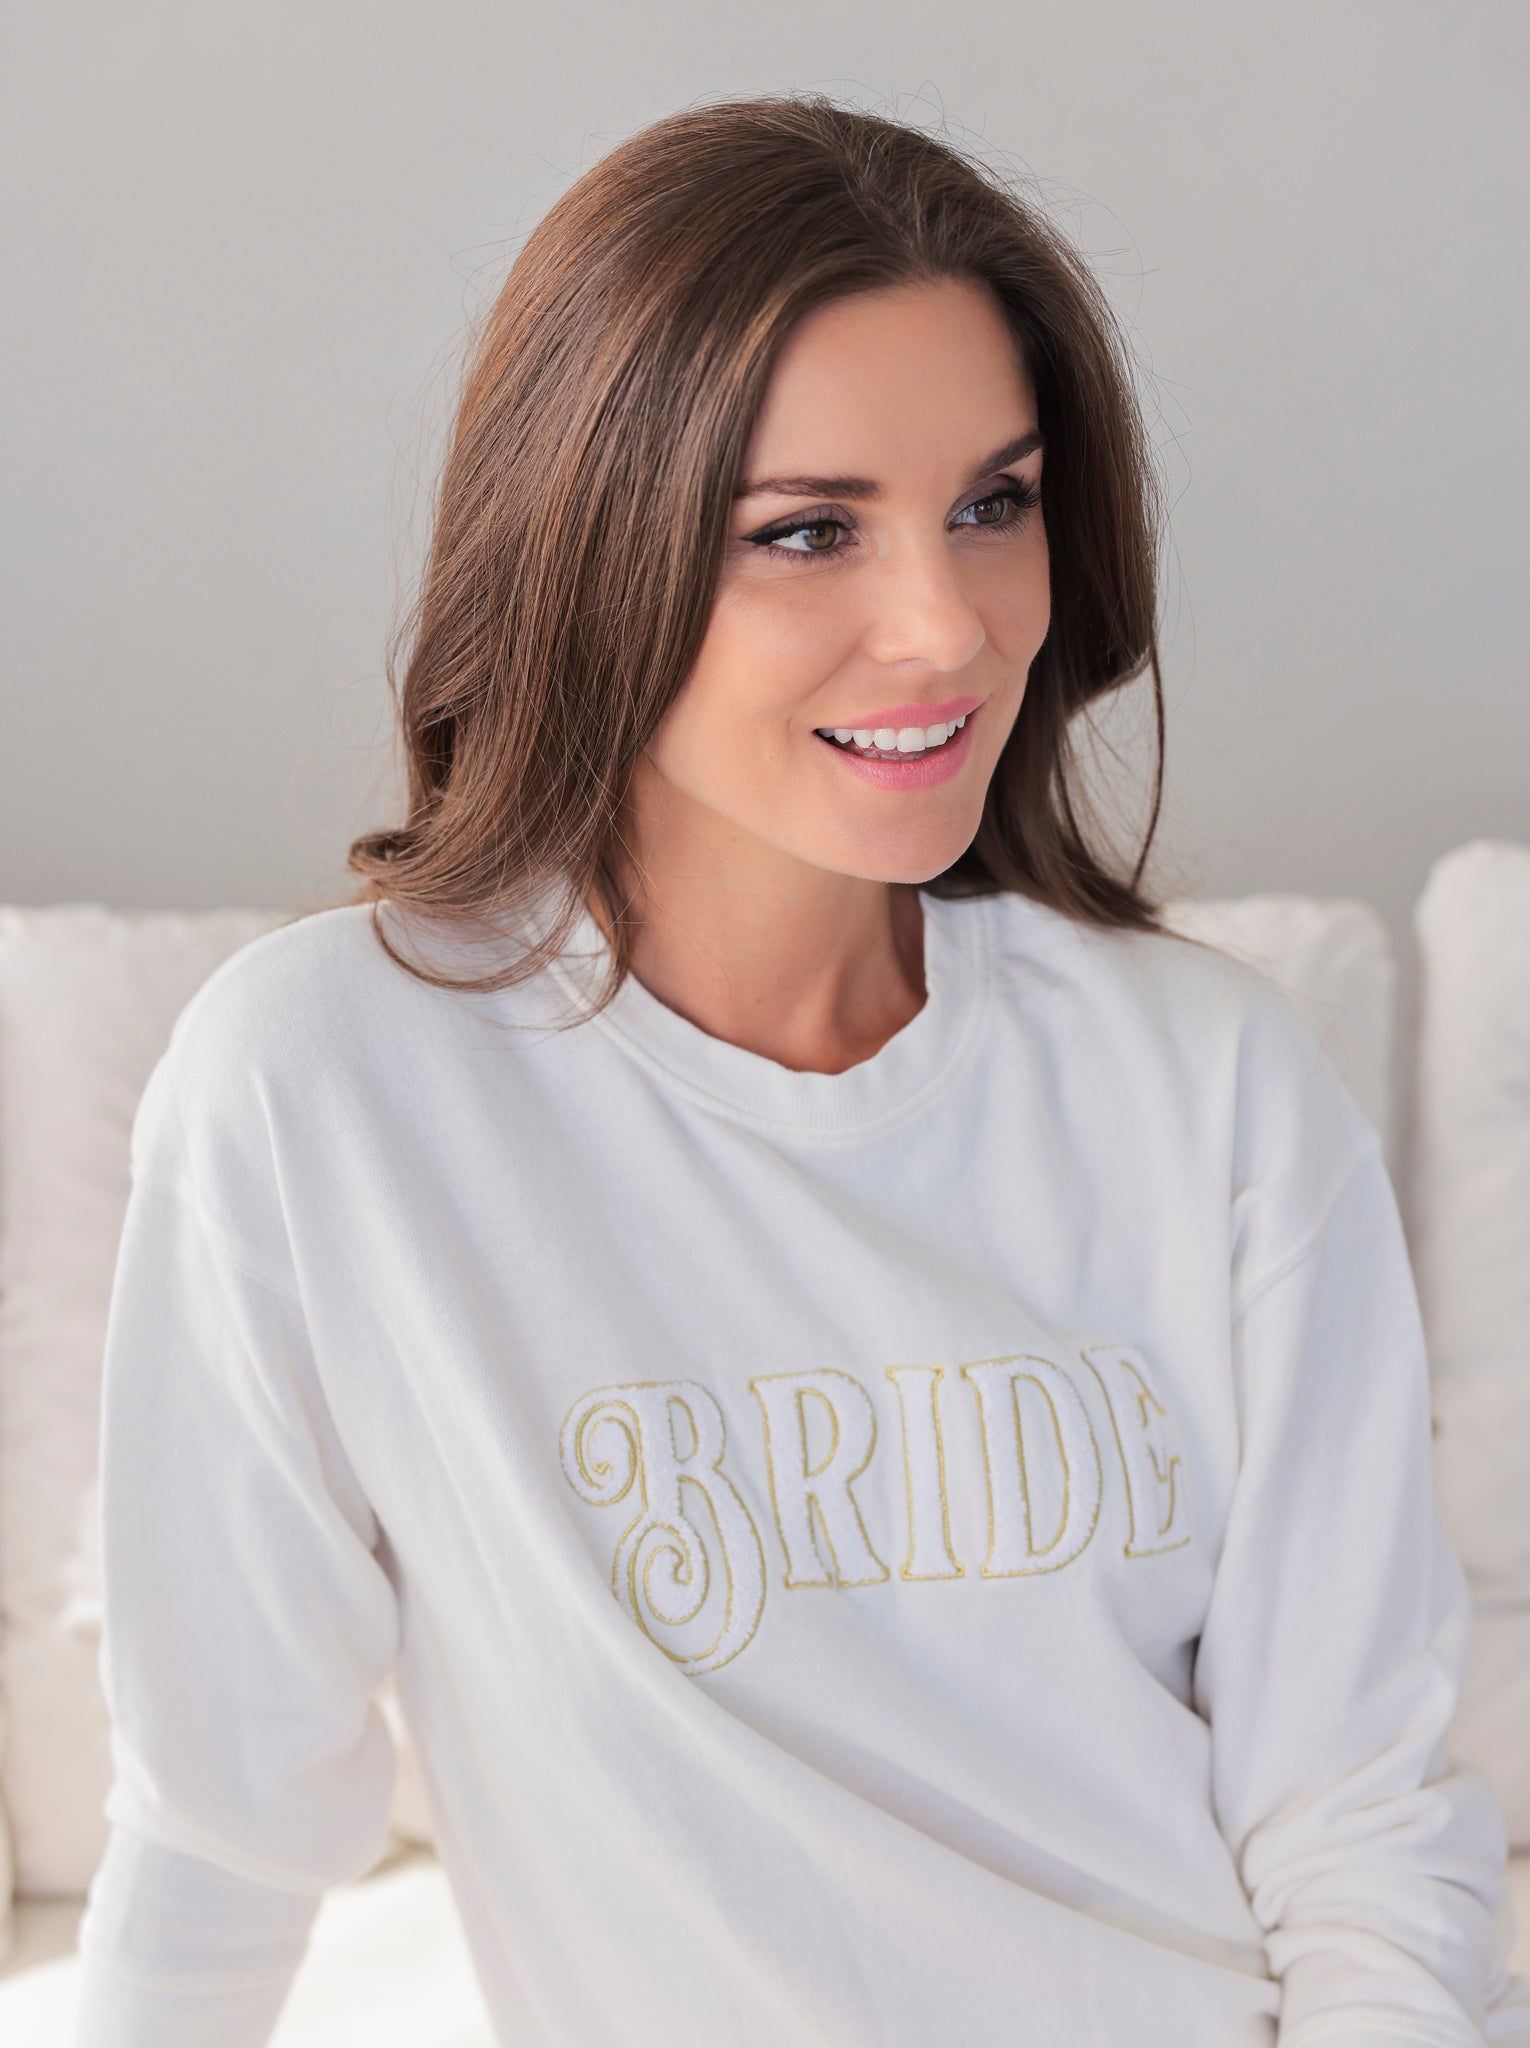 Buy "Bride" Sweatshirt, Ivory by Shiraleah